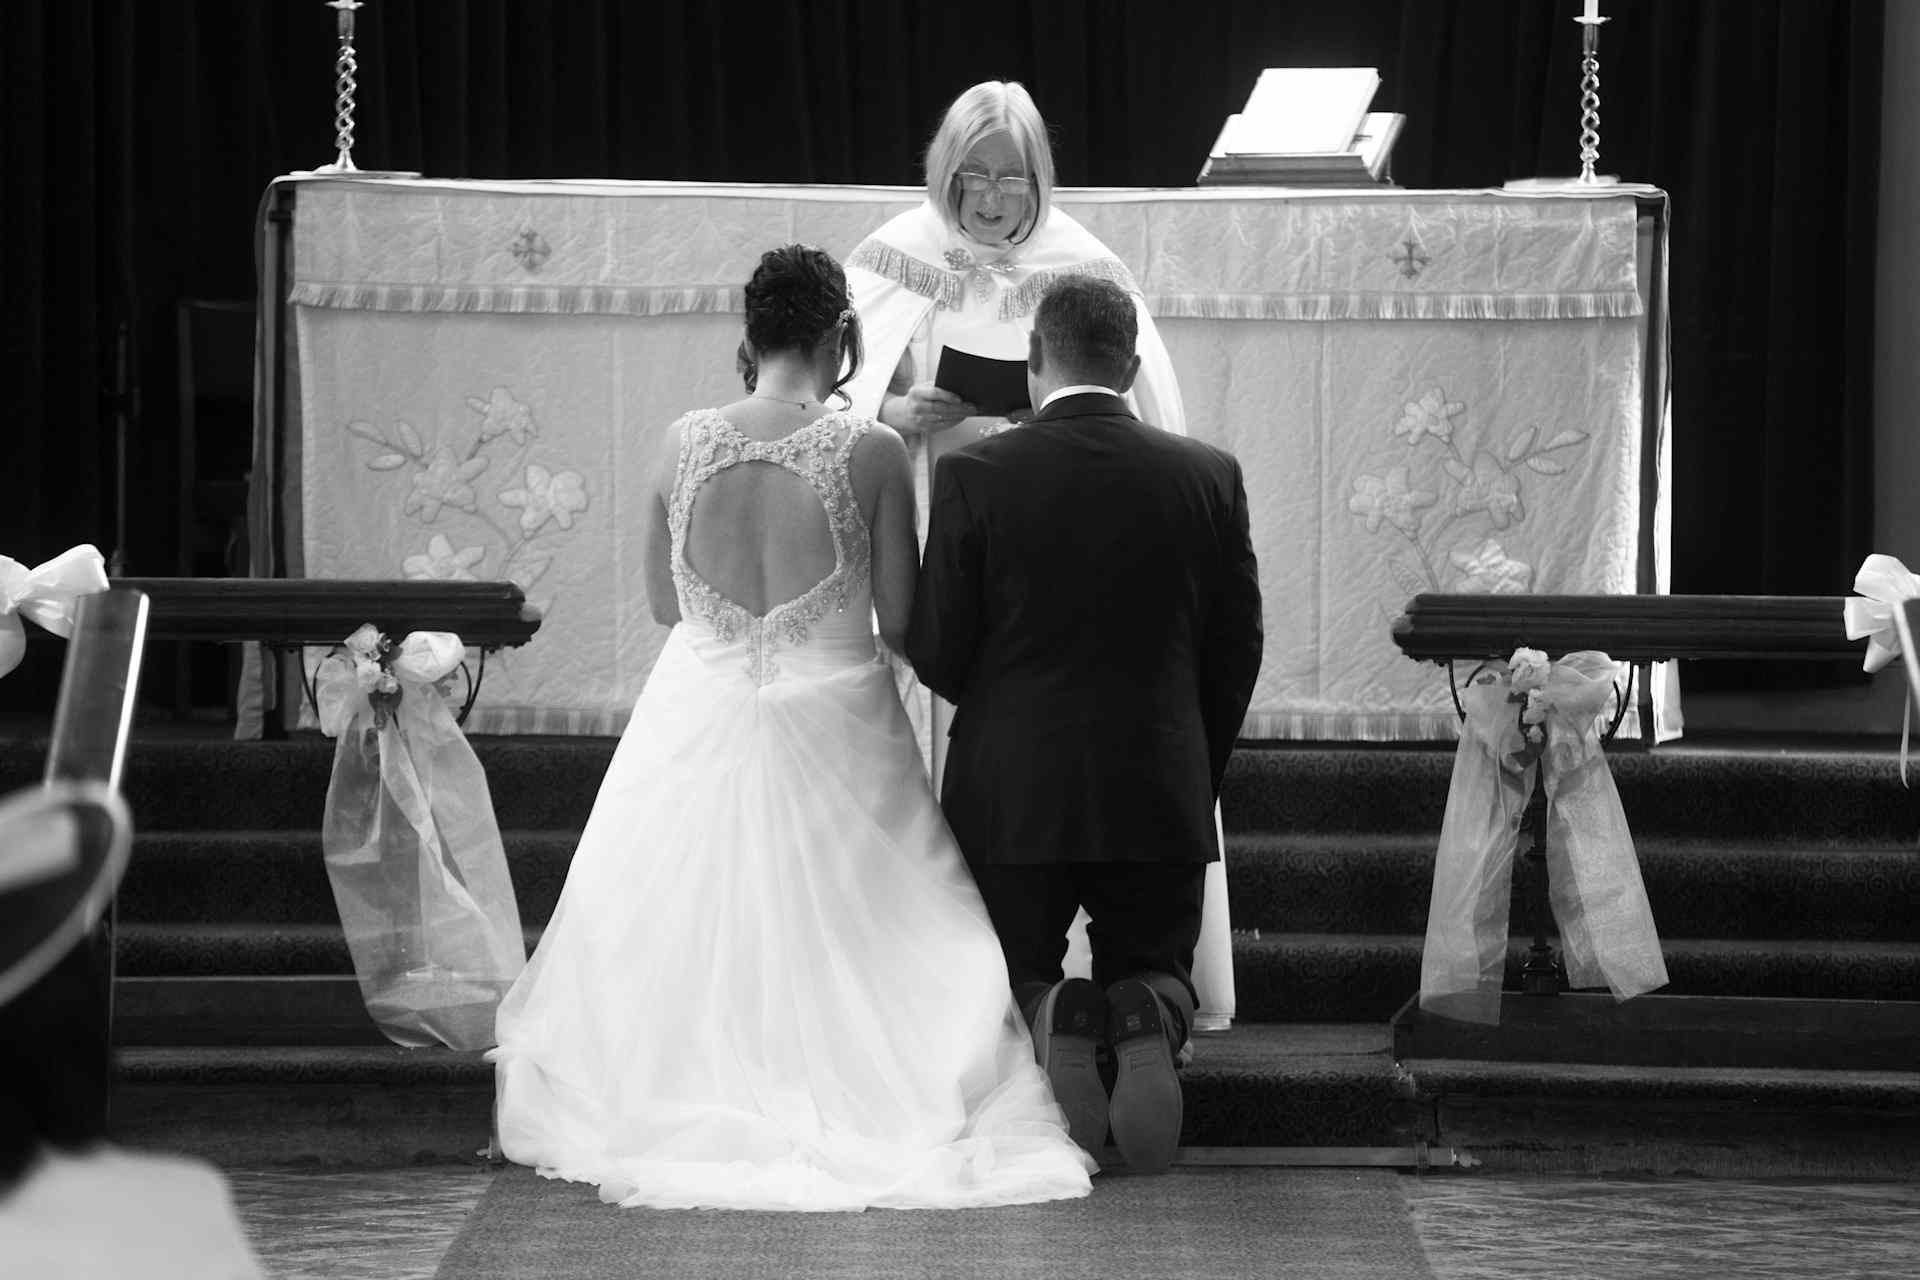 Bride & Groom kneeling at altar - Sheffield wedding